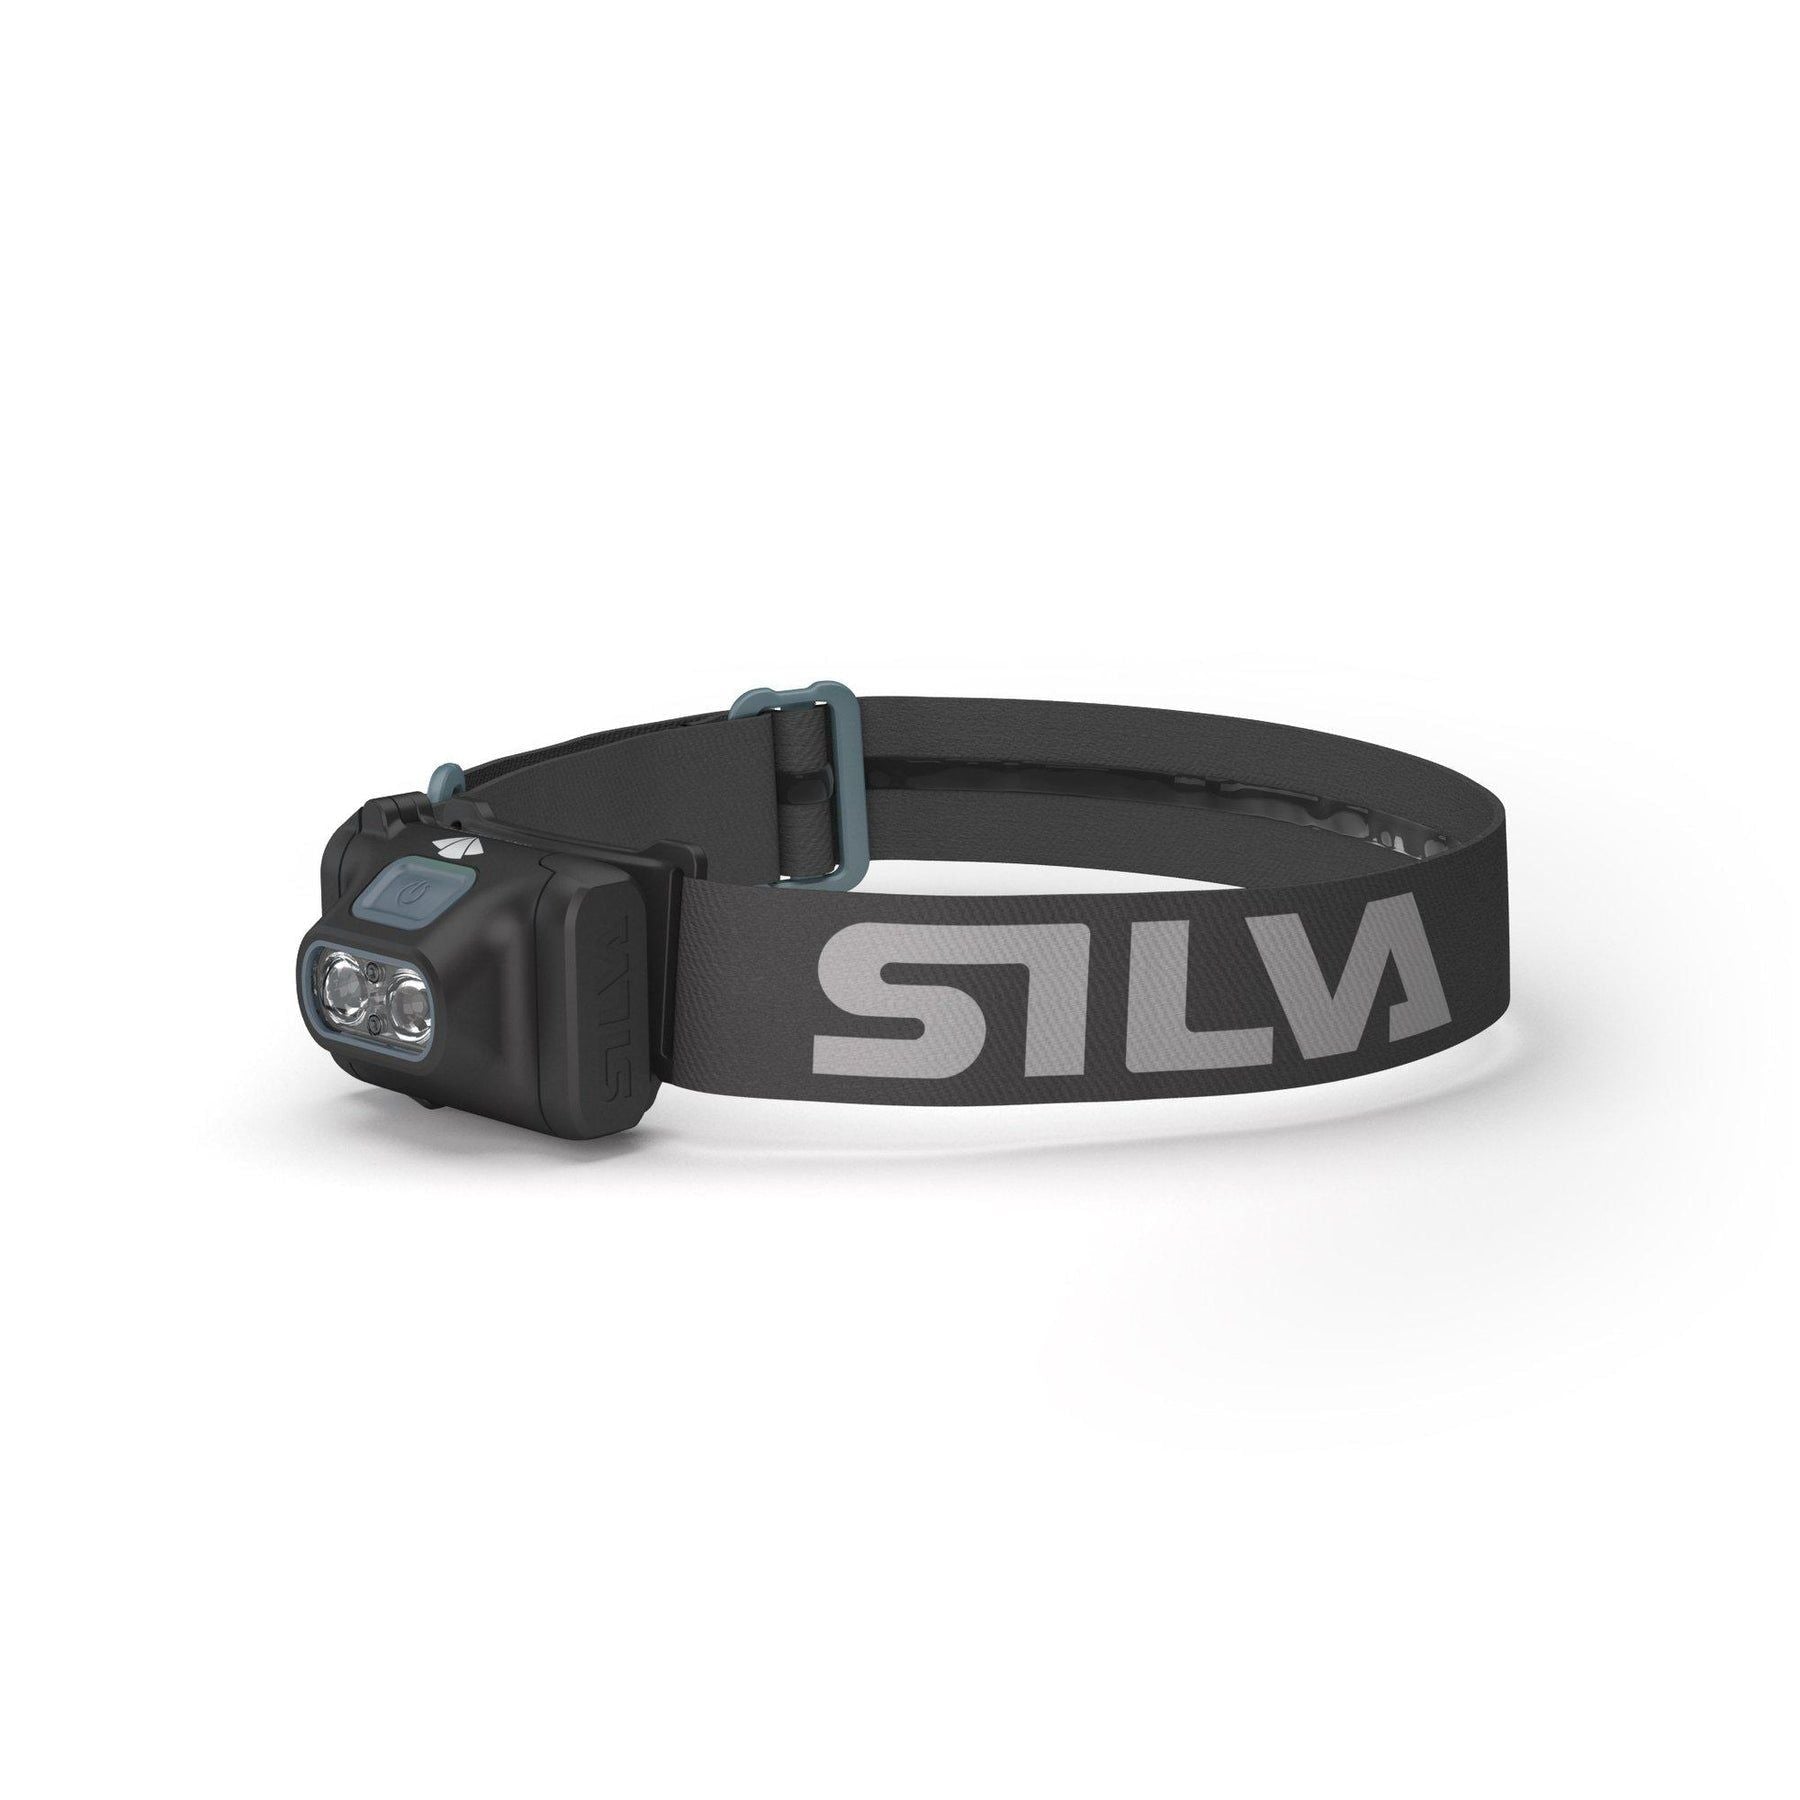 Silva Scout 3XT Stirnlampe